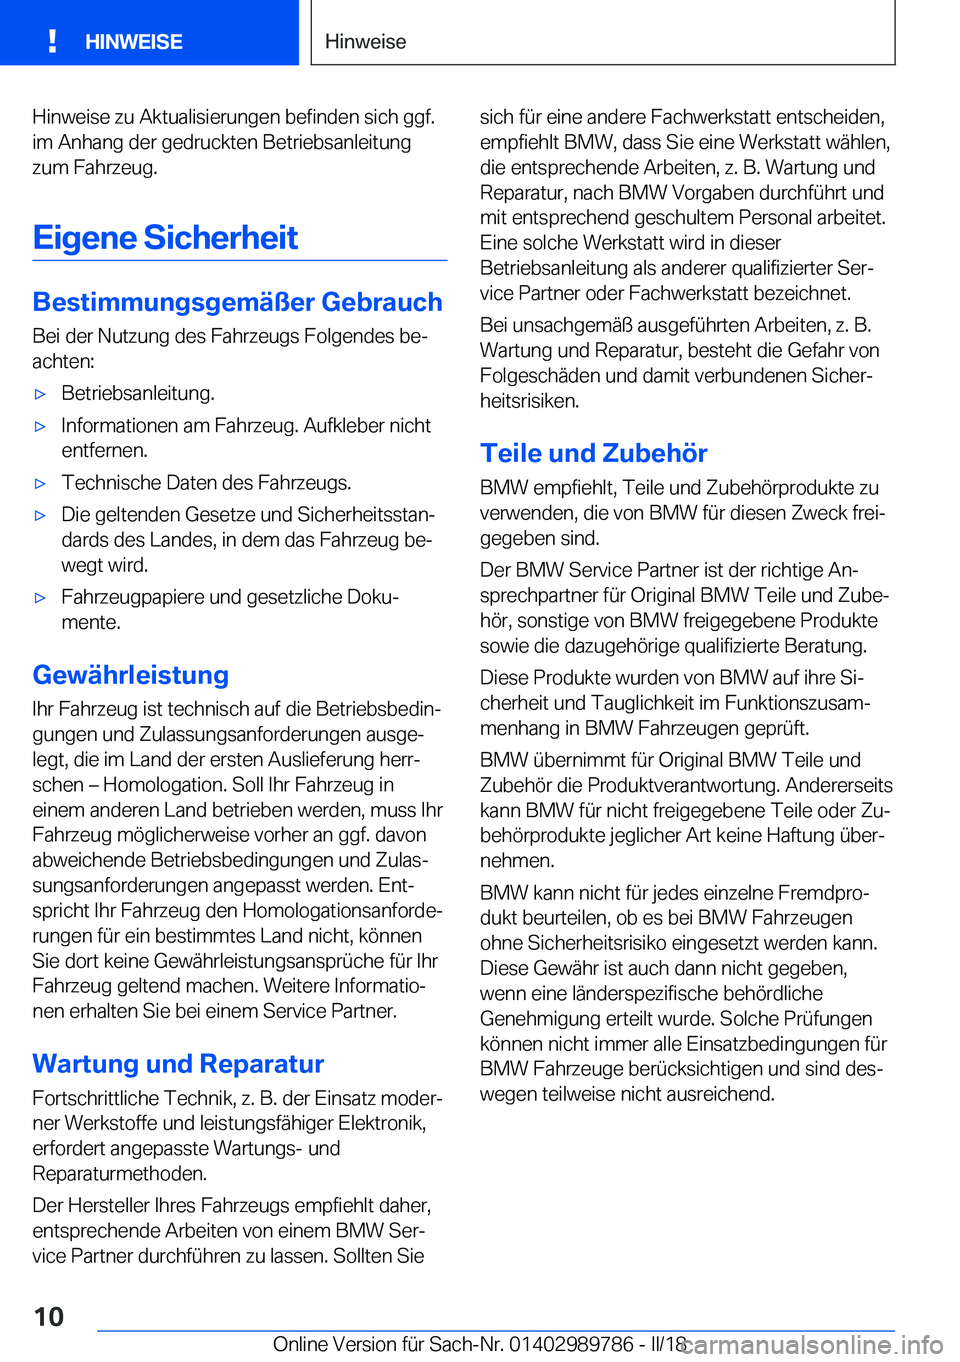 BMW M5 2018  Betriebsanleitungen (in German) �H�i�n�w�e�i�s�e� �z�u� �A�k�t�u�a�l�i�s�i�e�r�u�n�g�e�n� �b�e�f�i�n�d�e�n� �s�i�c�h� �g�g�f�.�i�m� �A�n�h�a�n�g� �d�e�r� �g�e�d�r�u�c�k�t�e�n� �B�e�t�r�i�e�b�s�a�n�l�e�i�t�u�n�g�z�u�m� �F�a�h�r�z�e�u